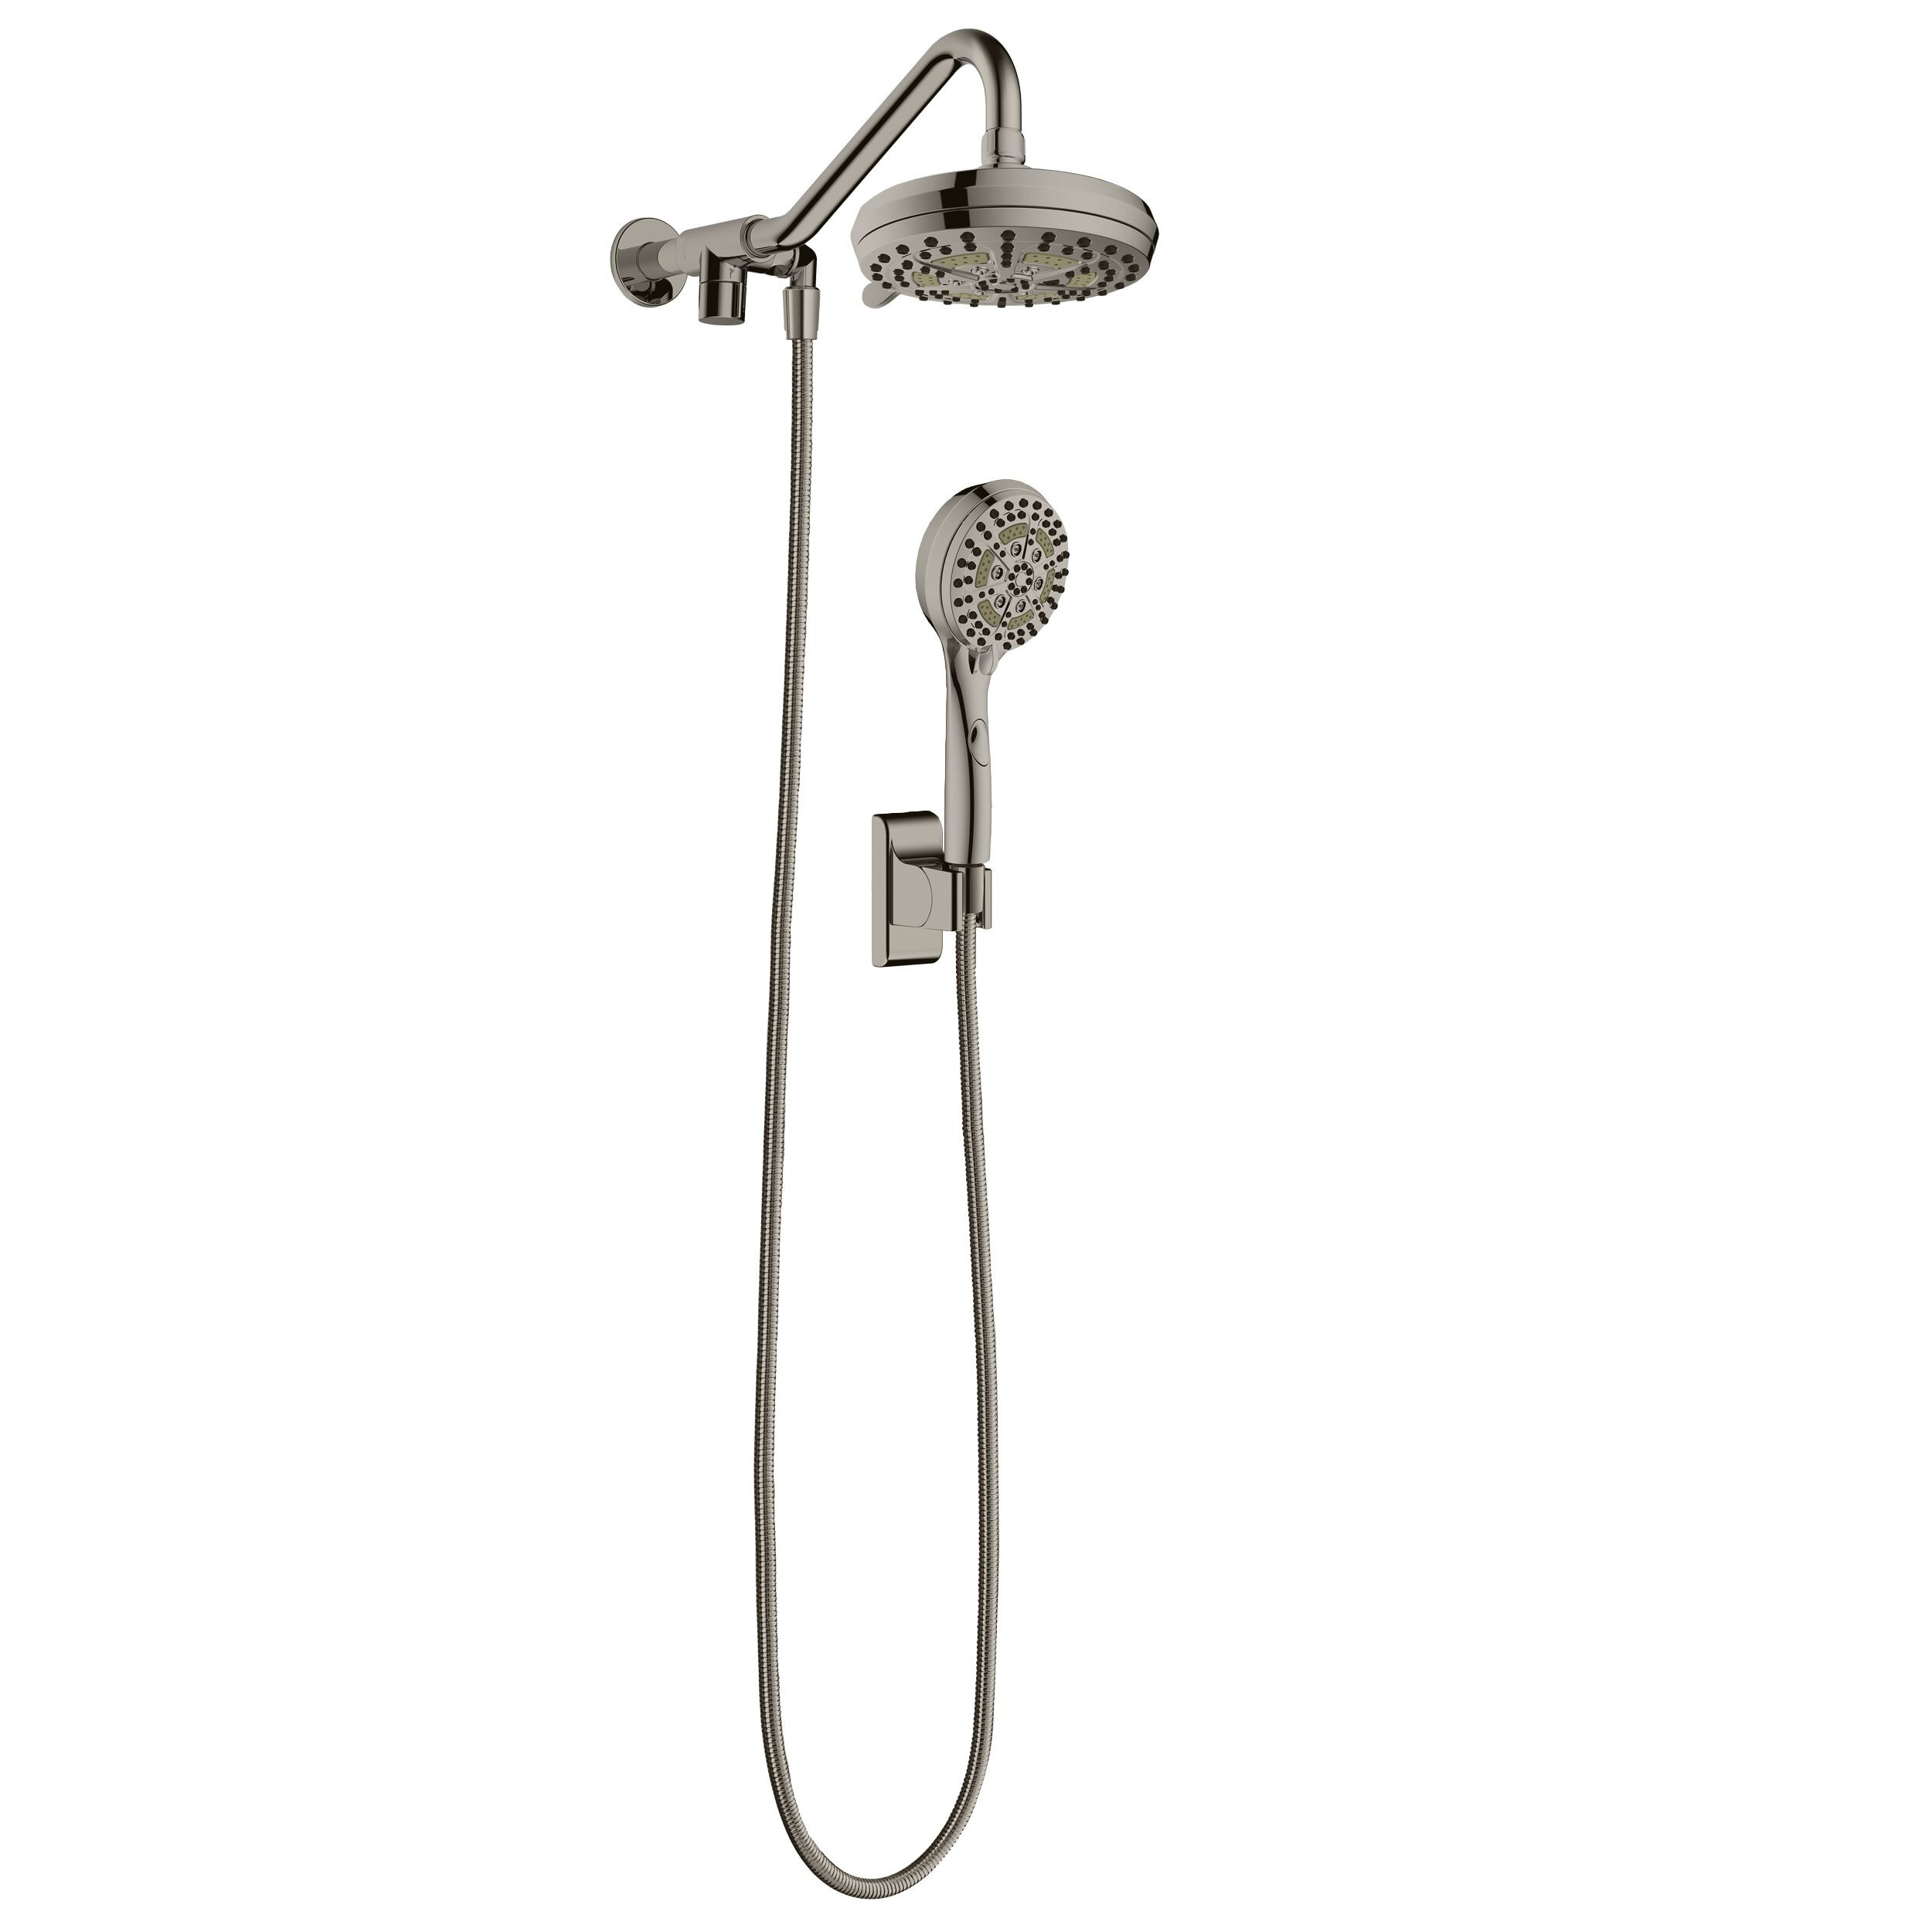 PULSE 1053-BN Oasis Bathroom Shower System In Brushed Nickel